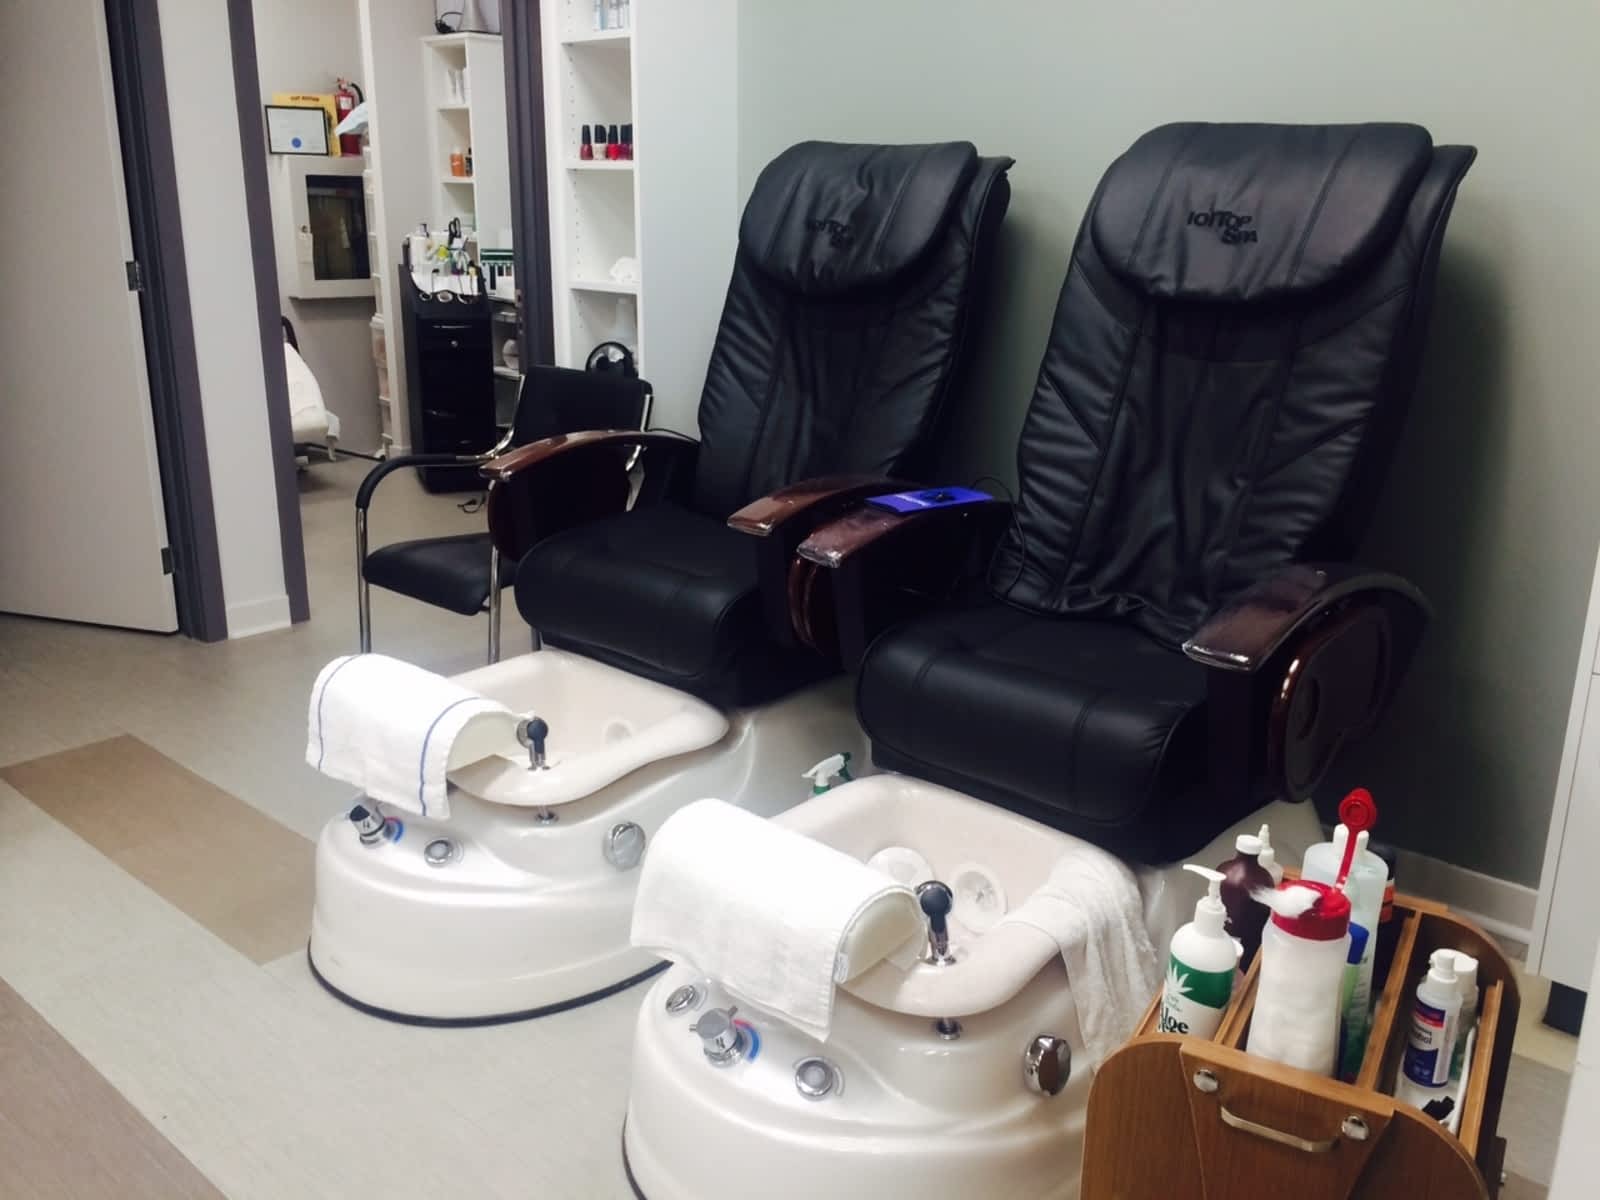 Heart to Heart Hair Salon & Spa - Opening Hours - 1-220 Eglinton Ave E,  Toronto, ON